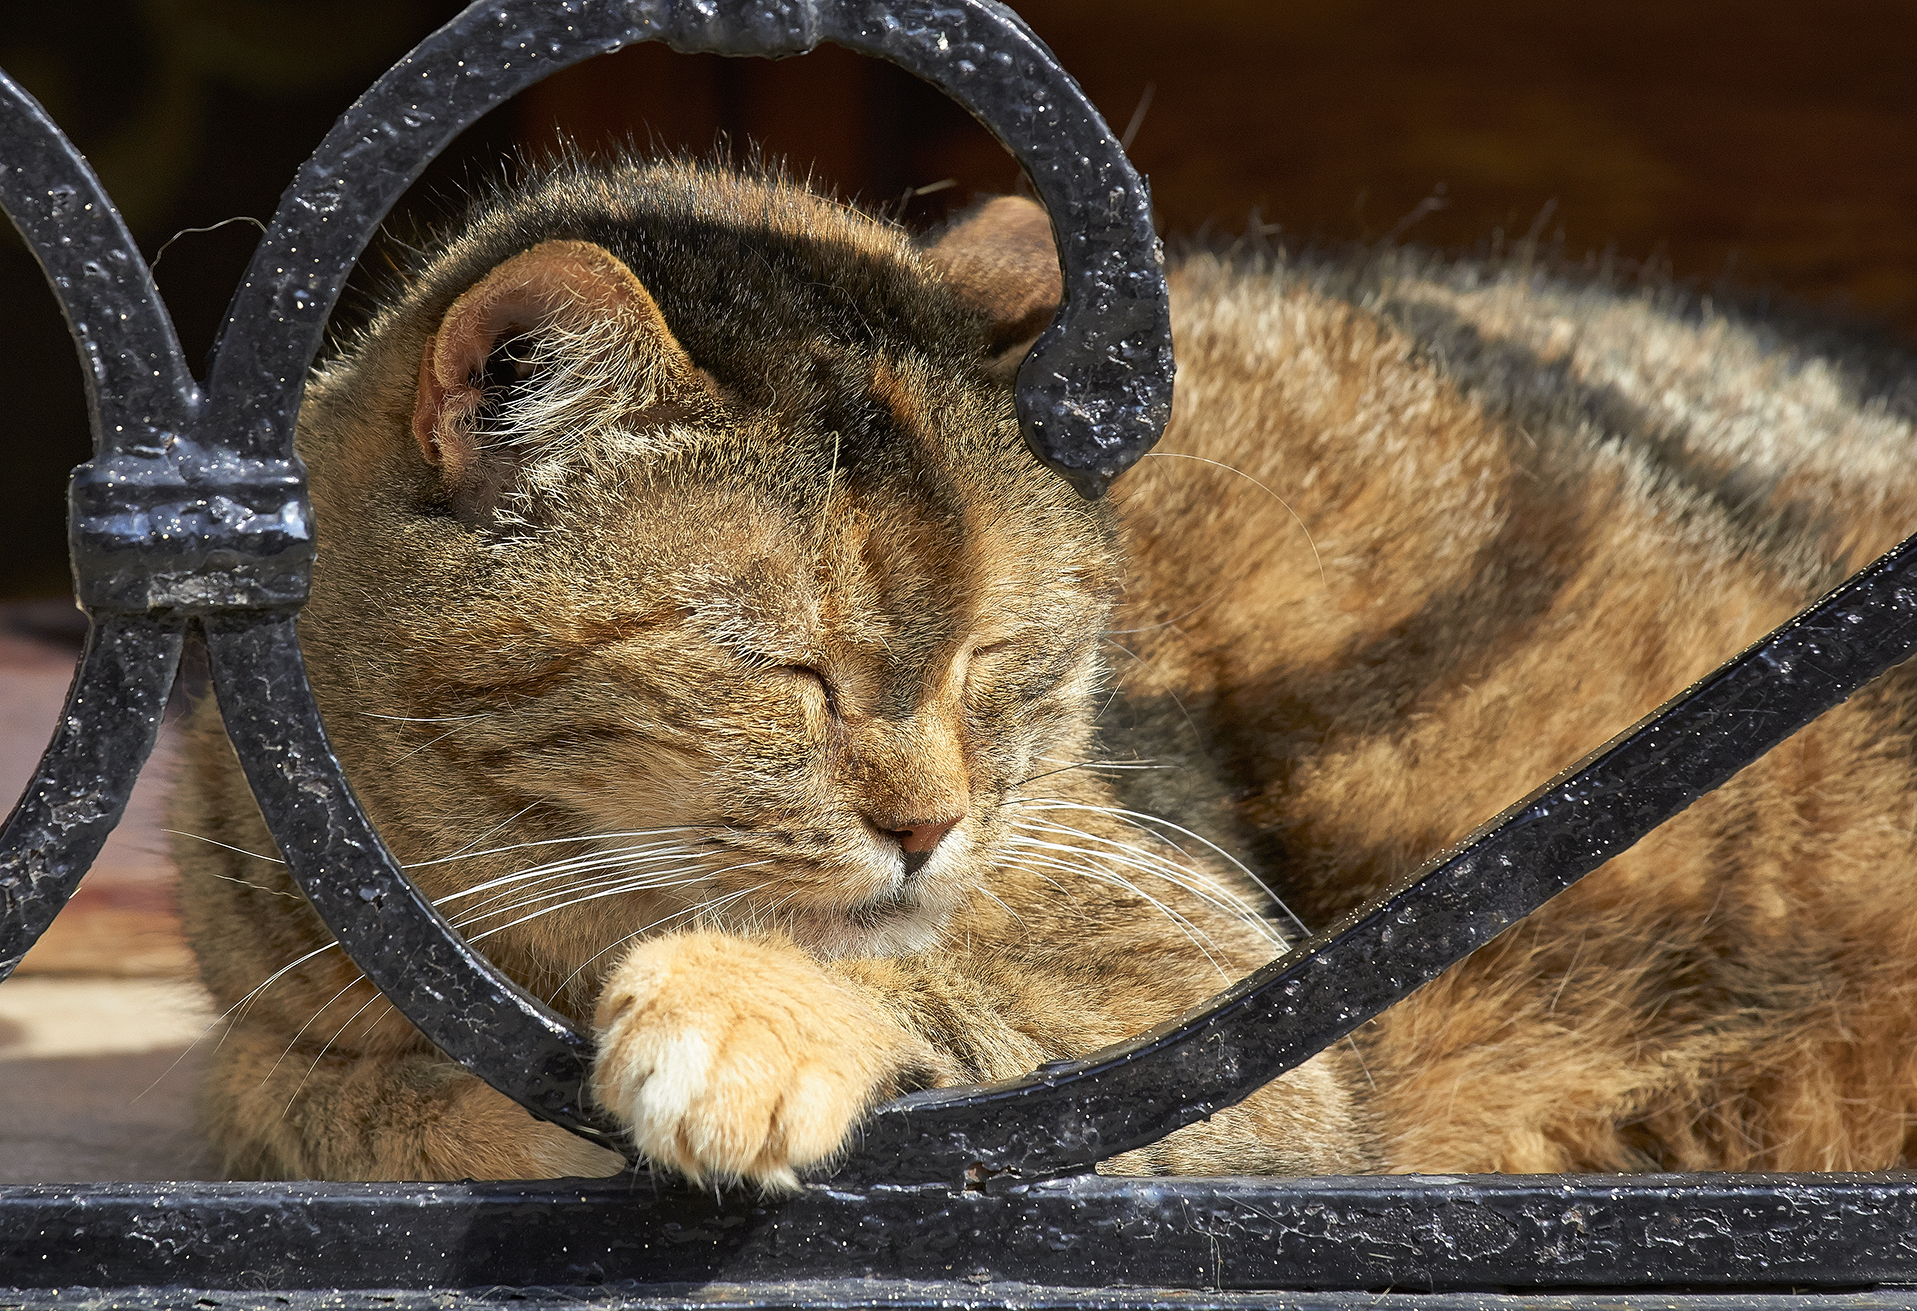 A cat sleeps resting against a metal bar.